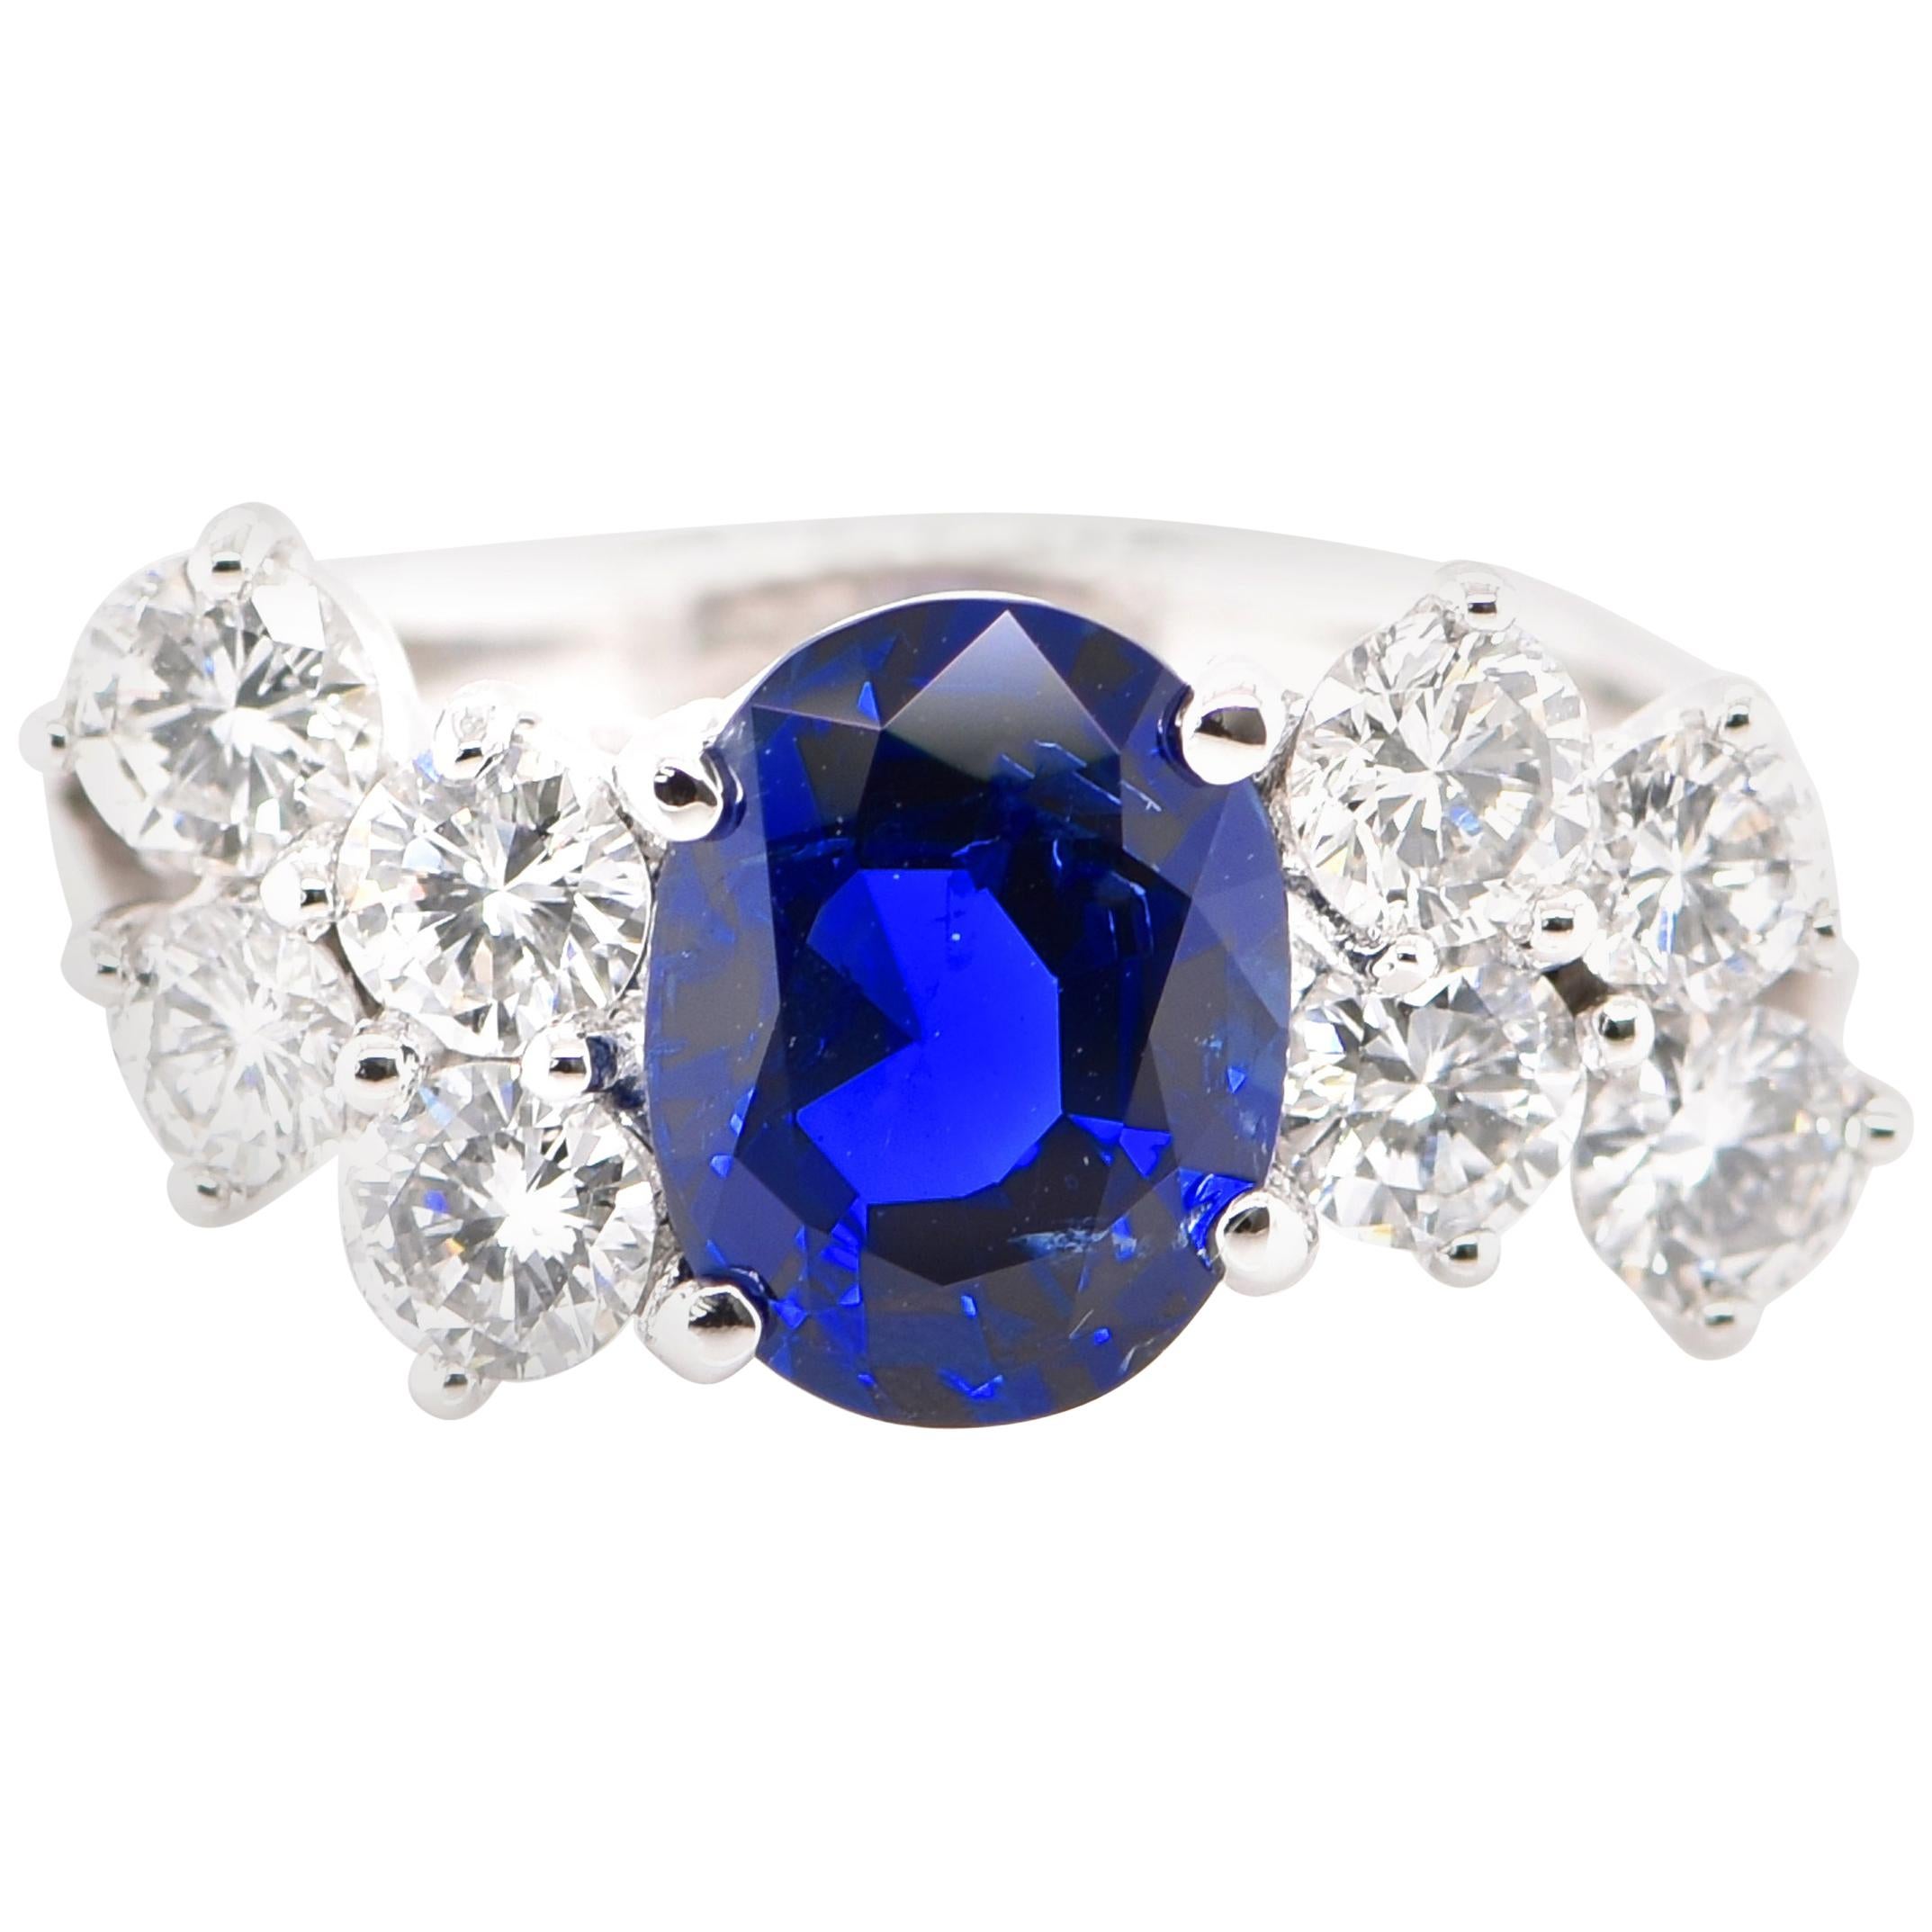 Royal Blue 2.36 Carat Untreated Burmese Sapphire & Diamond Ring Set in Platinum